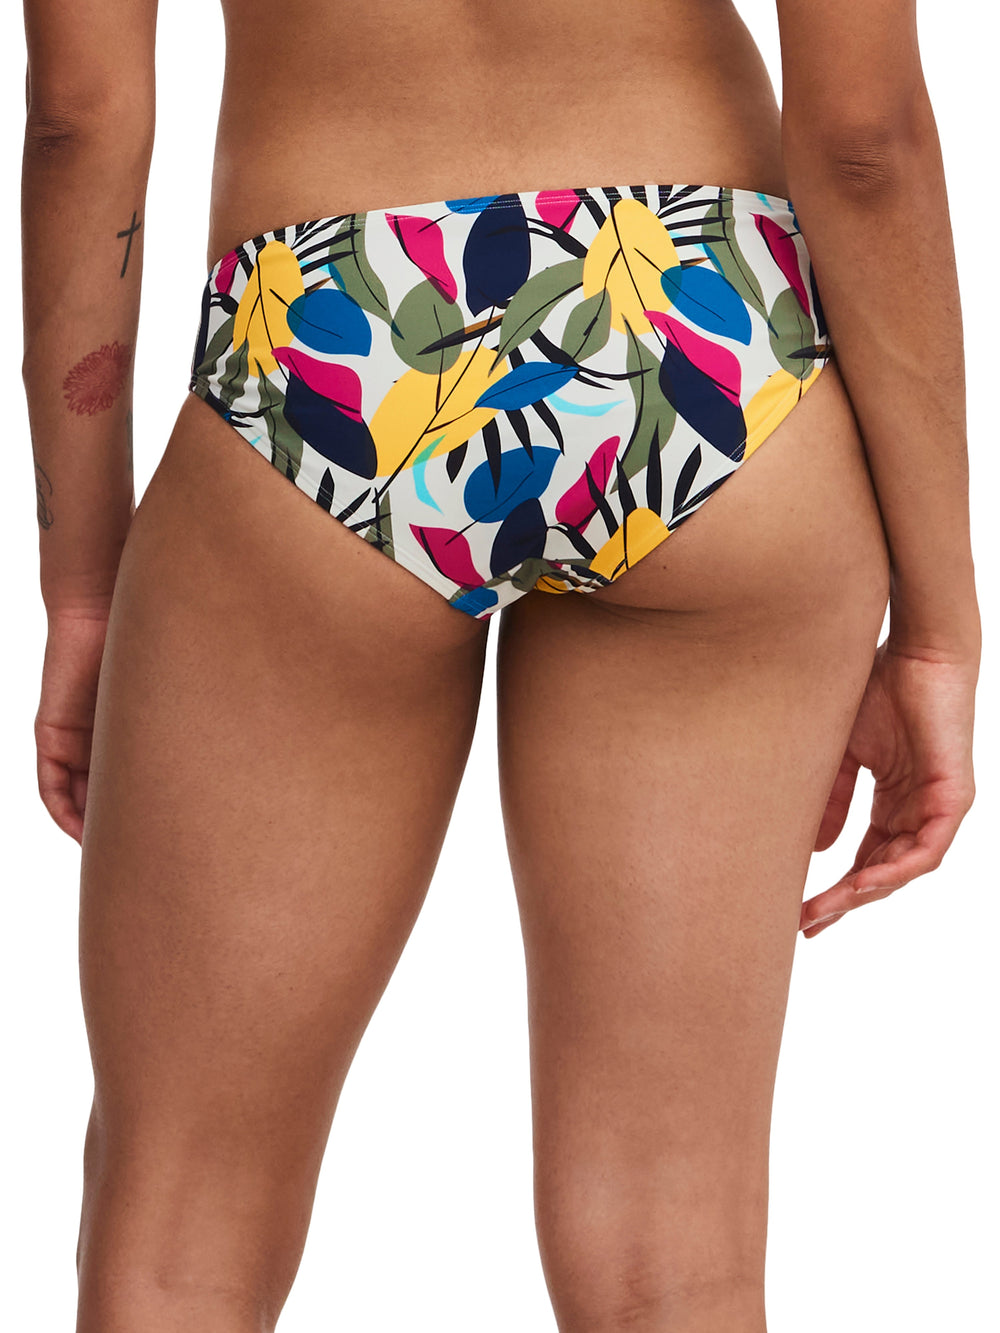 Femilet Bademode - Honduras Bikini-Slip Mehrfarbiger Blätter-Bikini-Slip Femilet Bademode